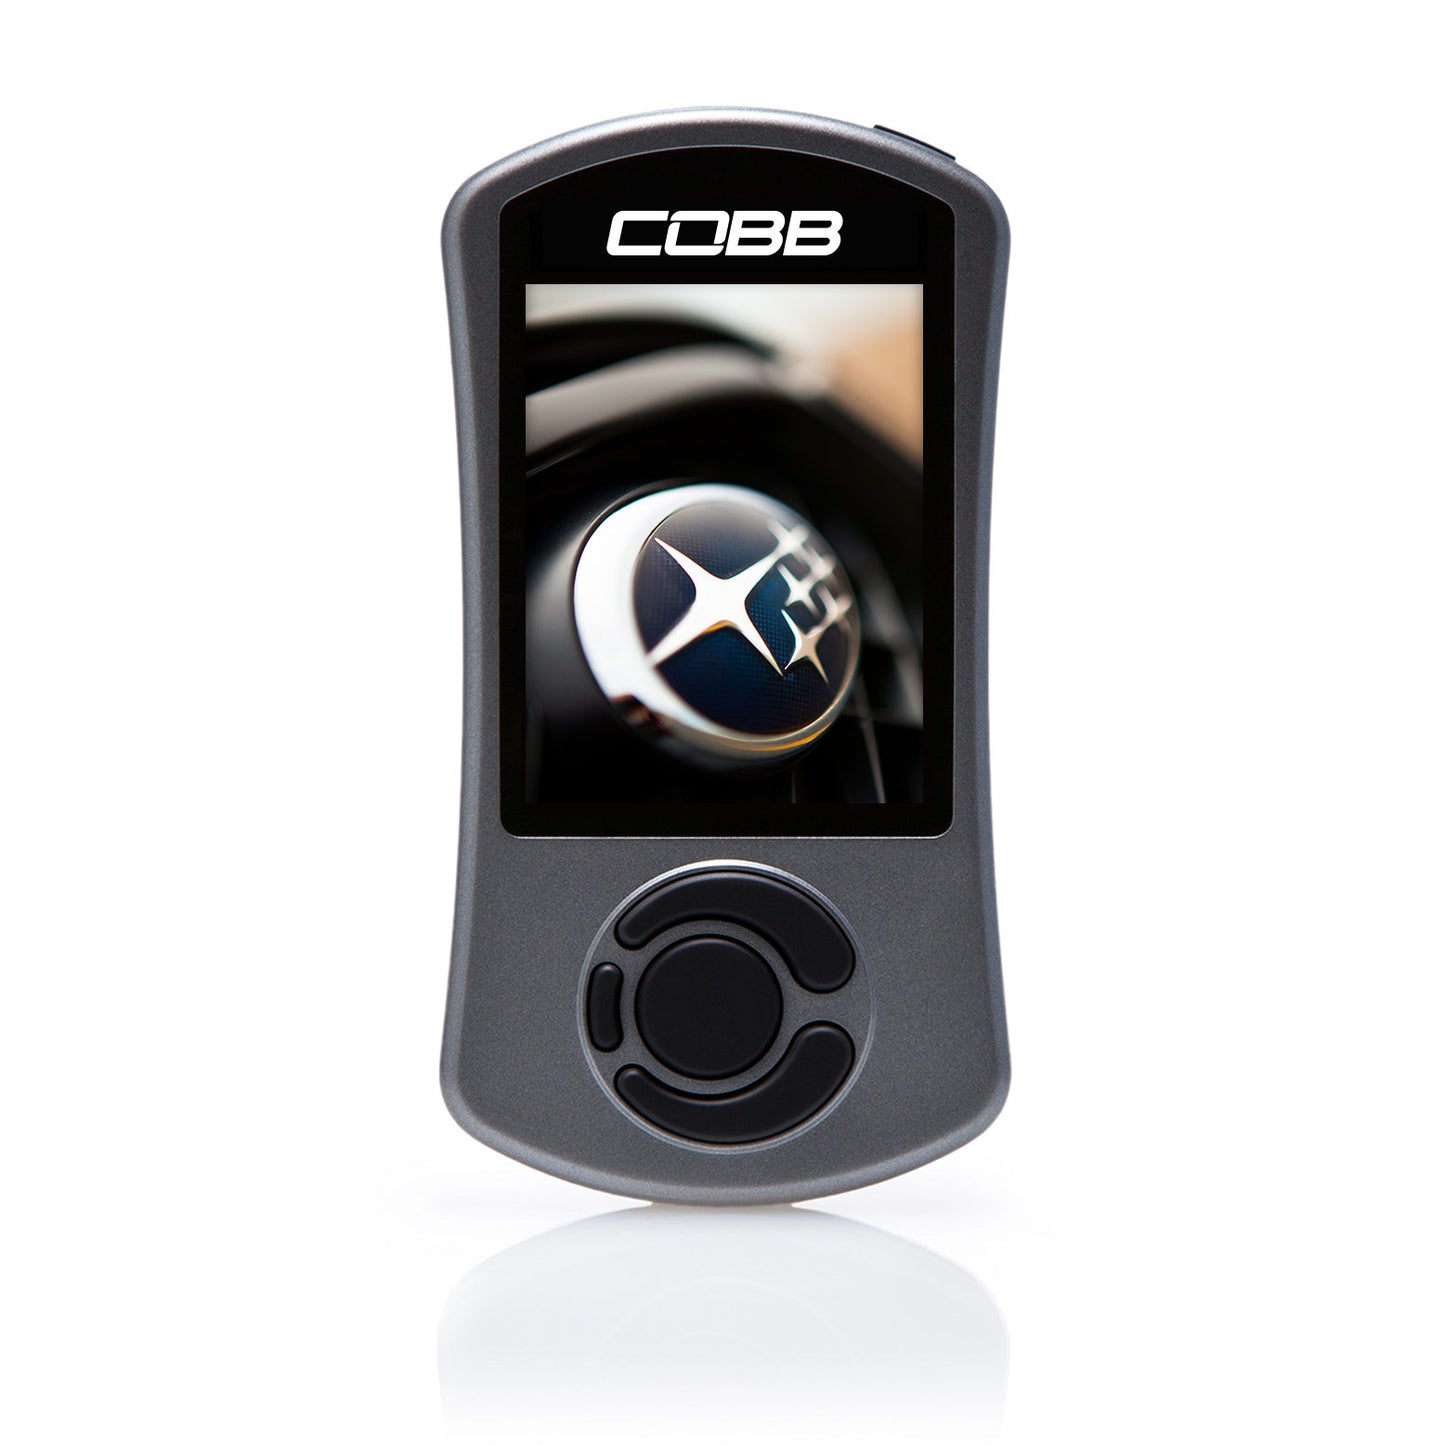 Cobb Tuning - Accessport & Invidia Q300 Turbo Back - STi VAB (15-20)